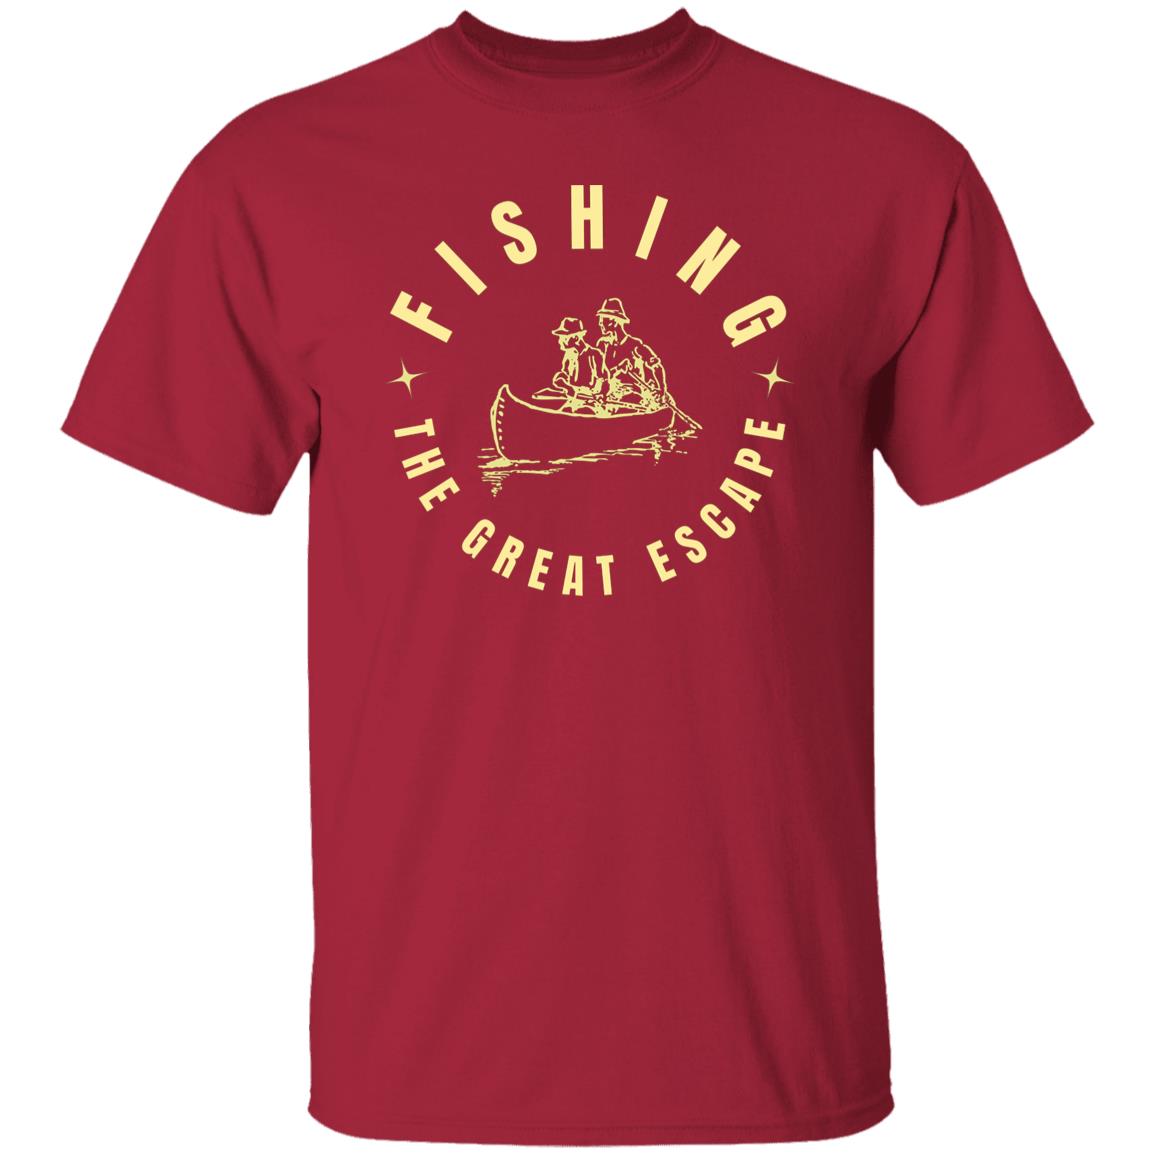 Fishing the great escape t-shirt k cardinal